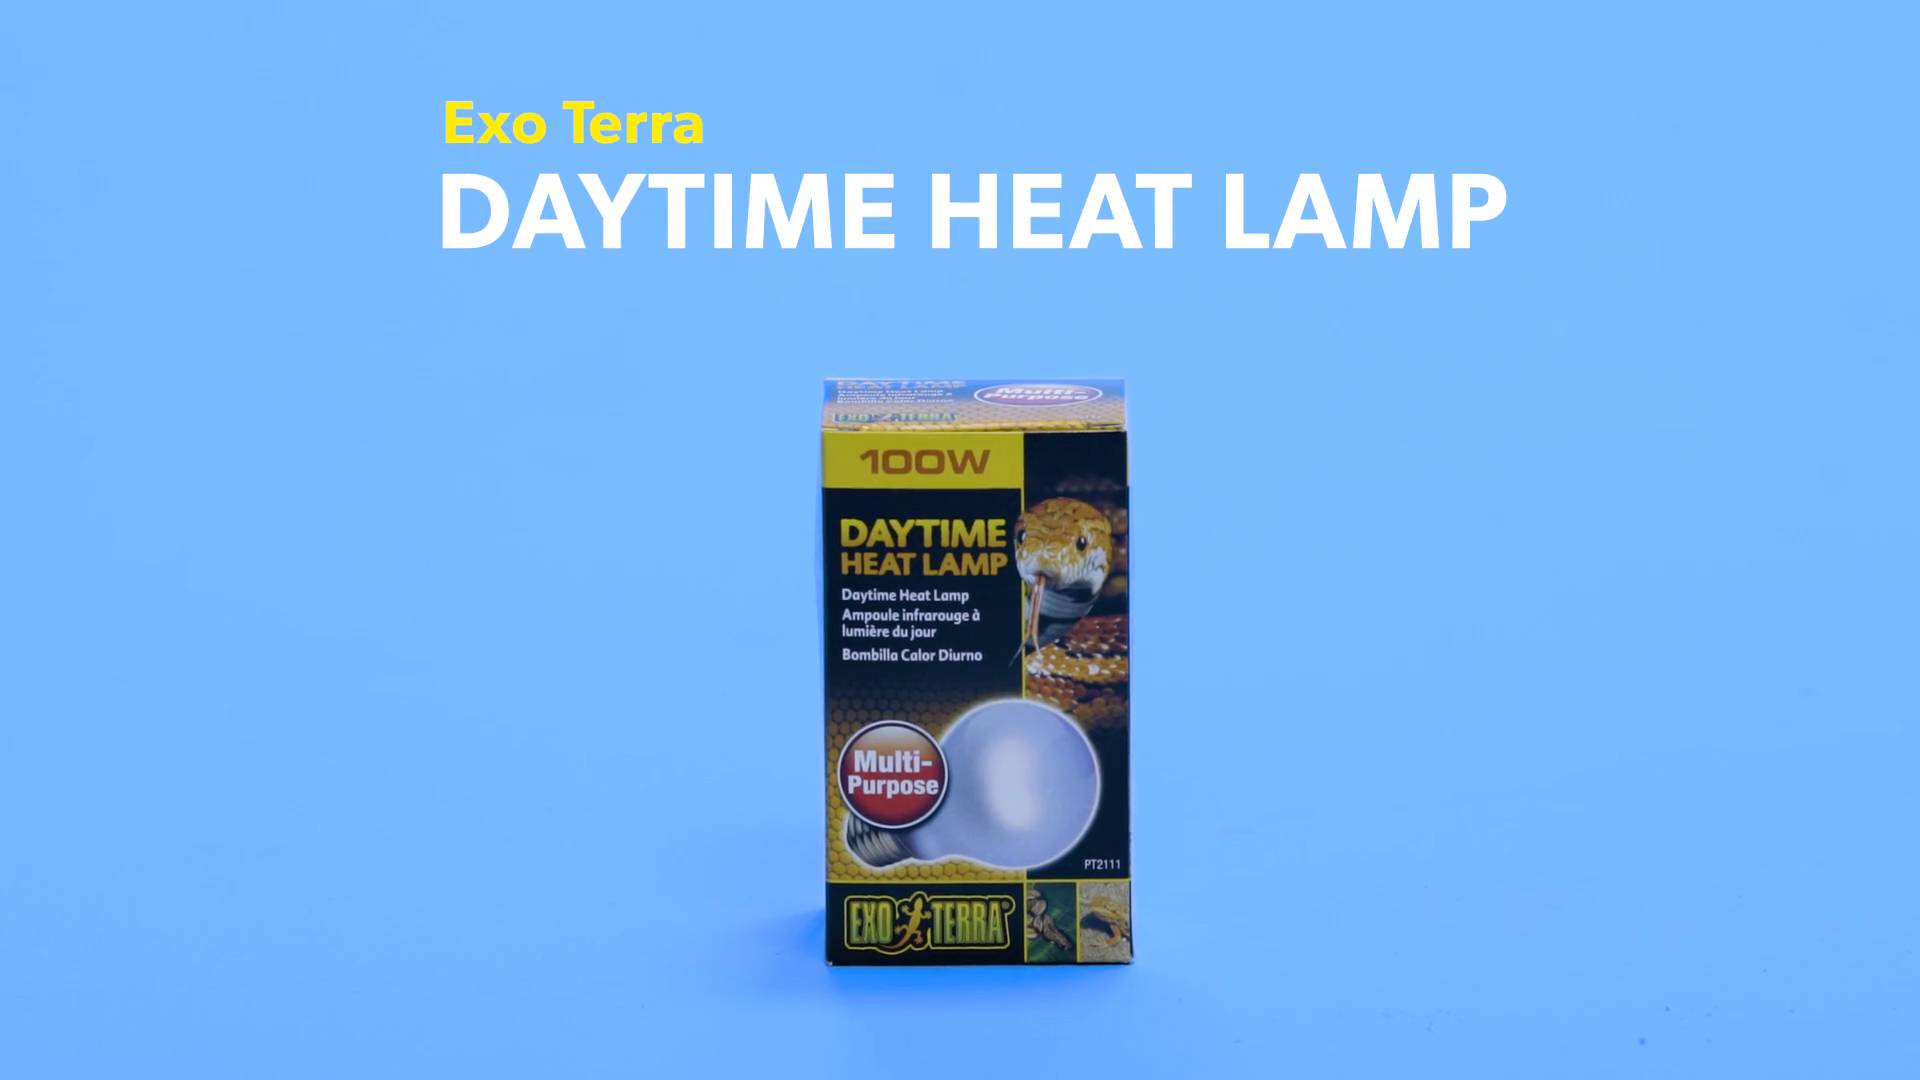 exo terra daytime heat lamp 100w